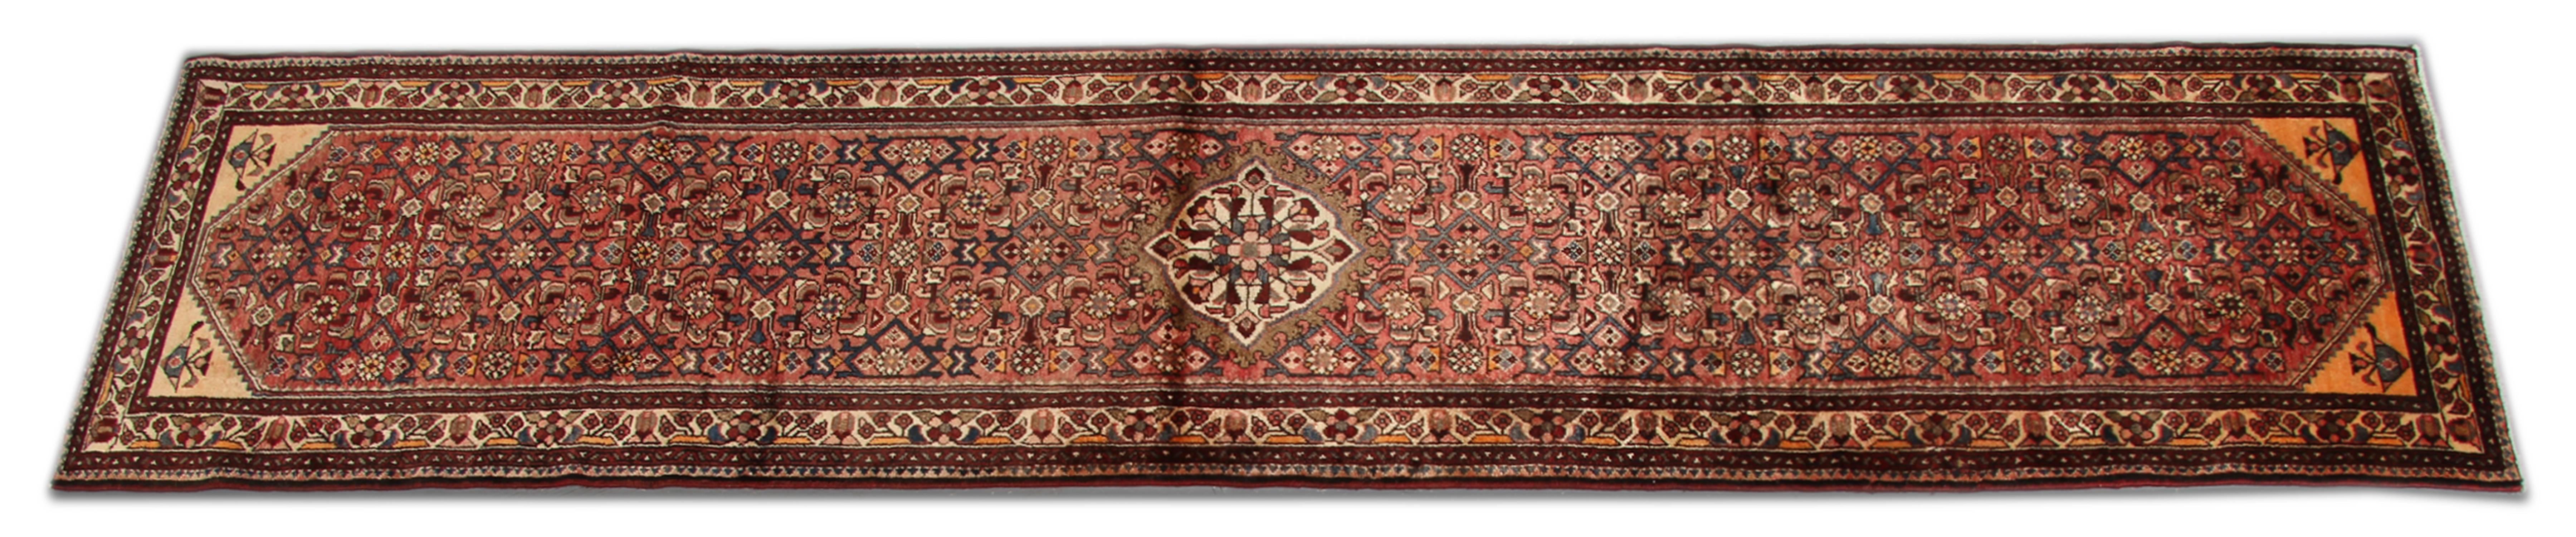 Rustic Antique Handmade Carpet Runner Oriental Rug Traditional Wool Runner 390x85cm  For Sale